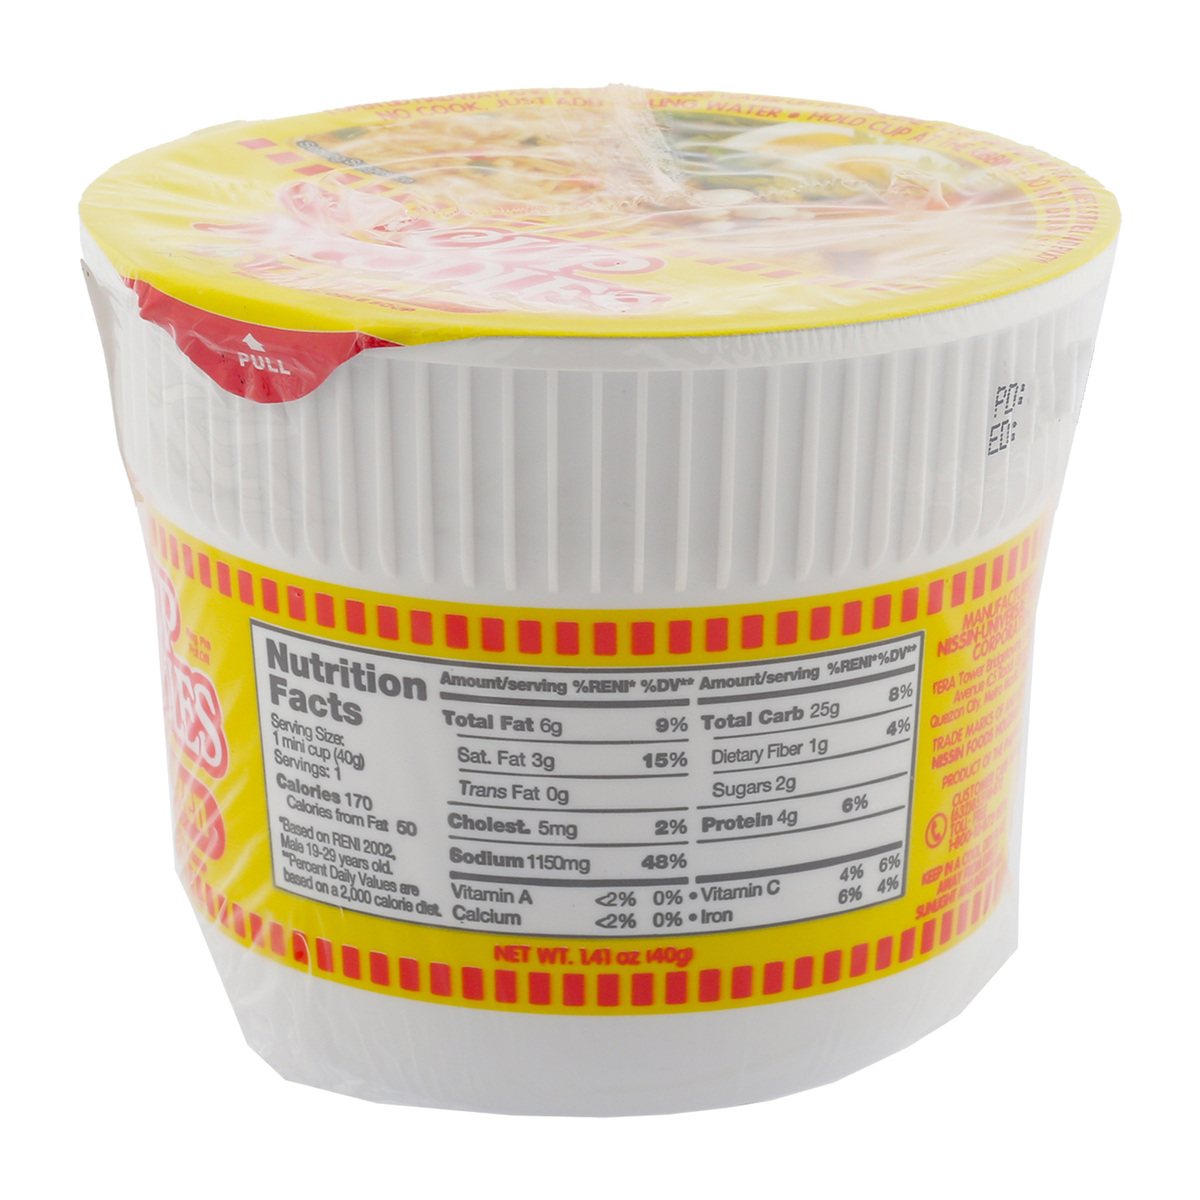 Buy Nissin Cup Noodle Chicken 40g Online in Kuwait